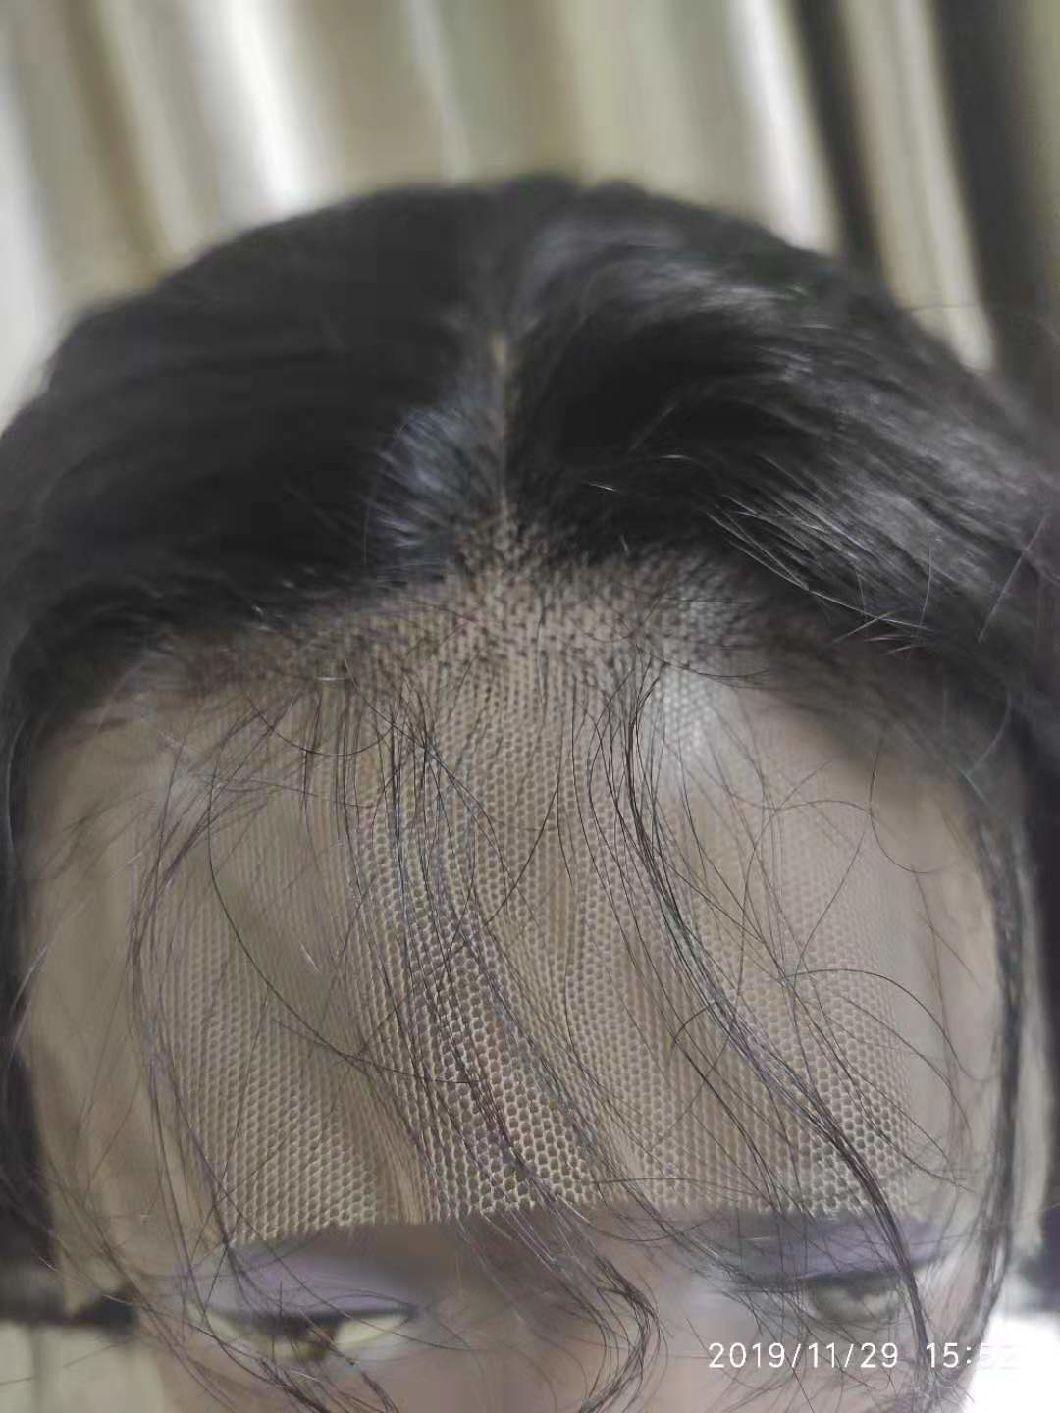 Short Hair Water Wave Raw Brazilian Human Hair Lace Wig